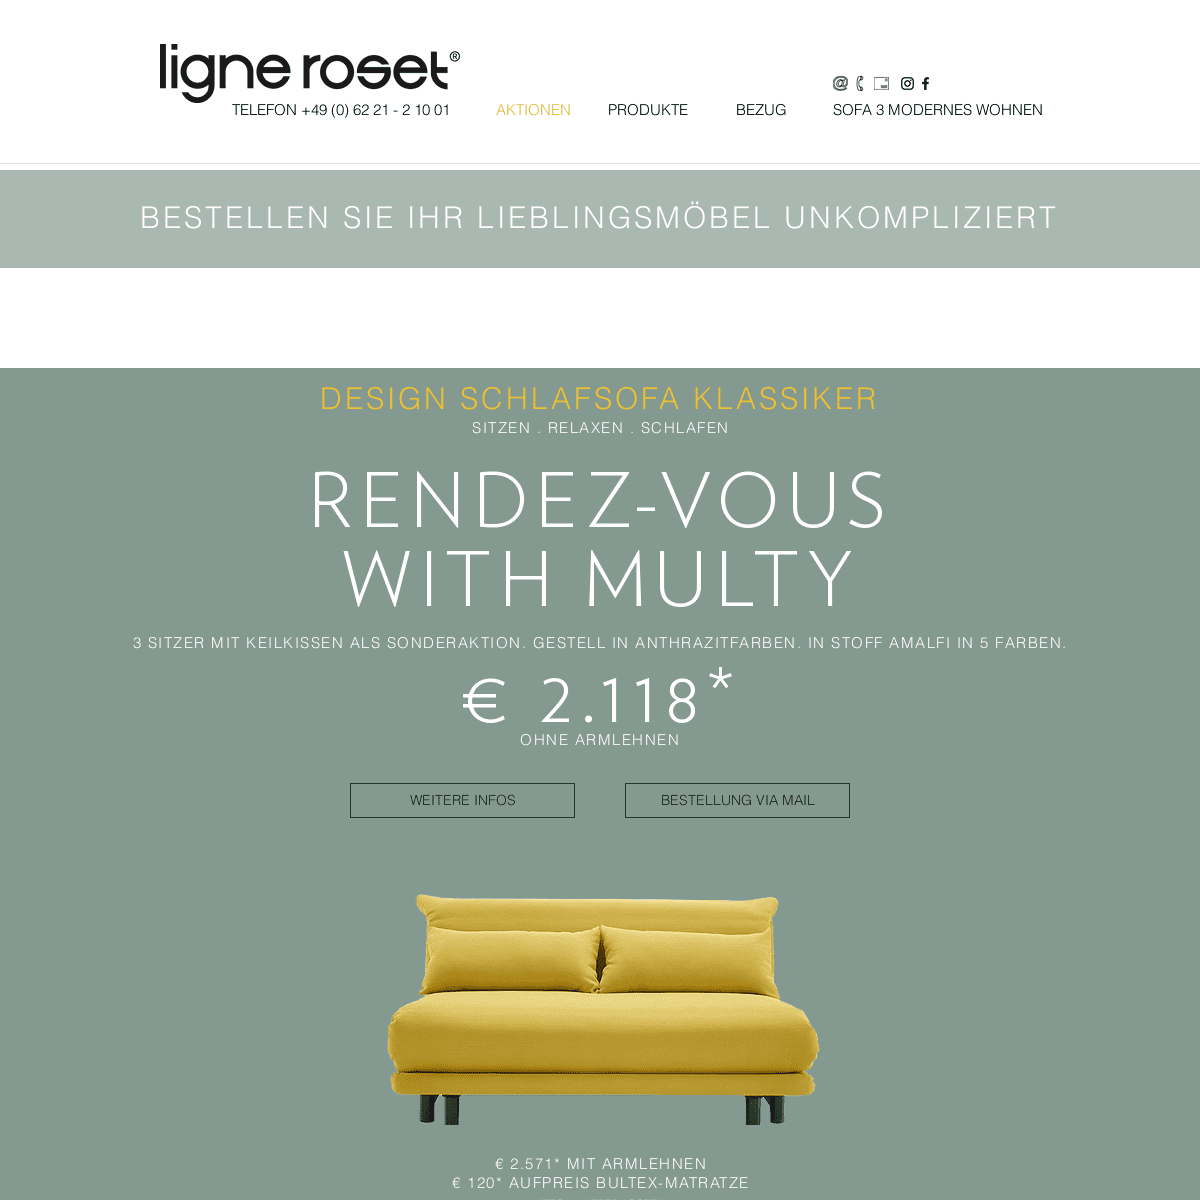 A complete backup of sofa3-ligne-roset.de